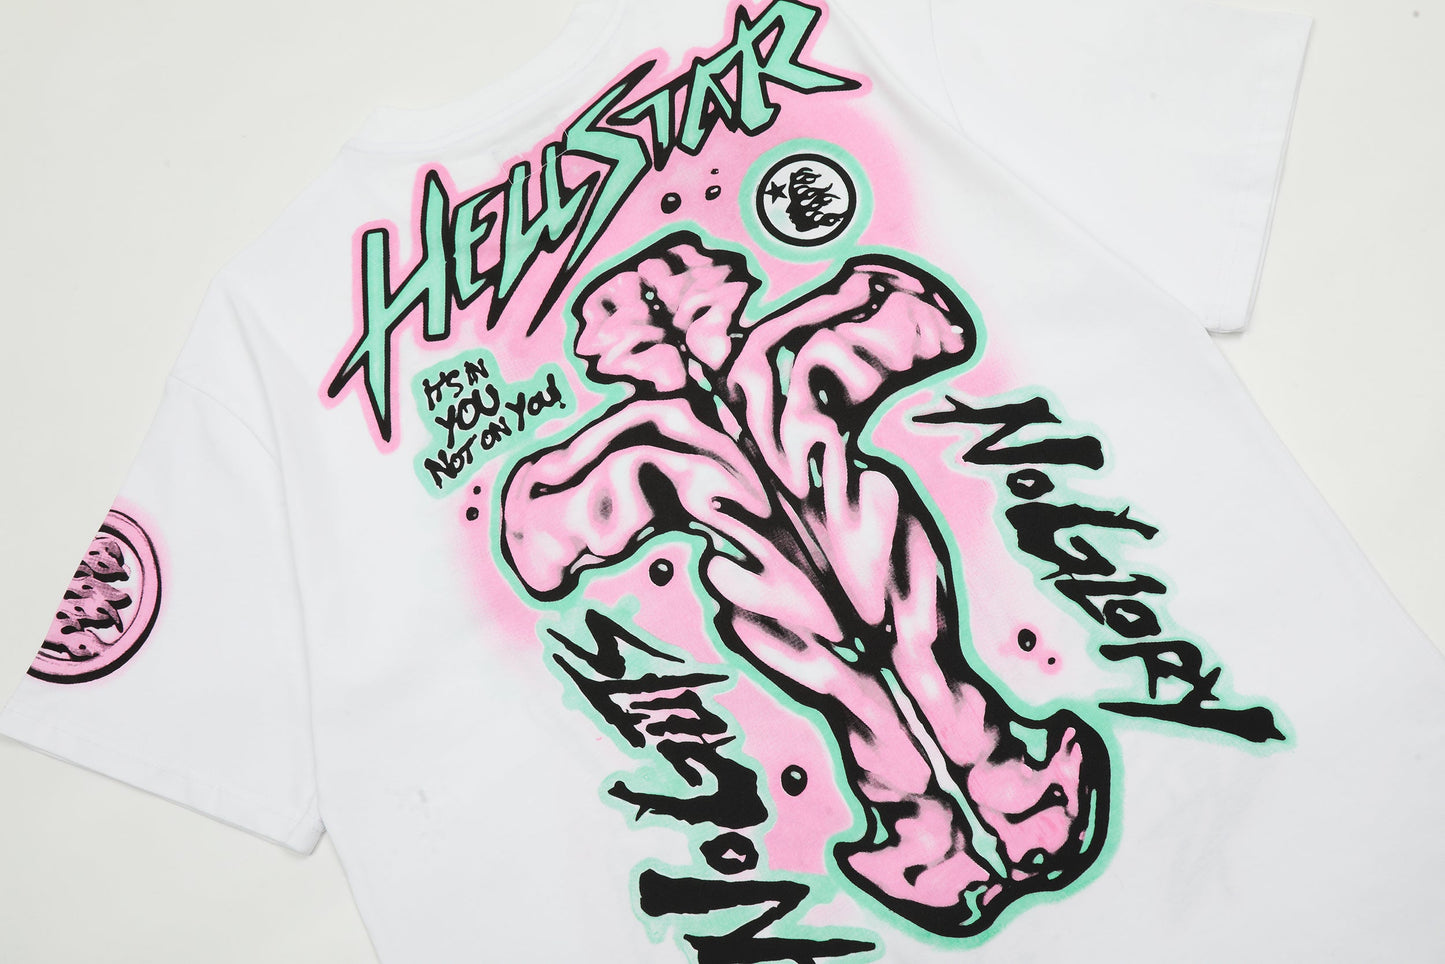 Hellstar 2024 new fashion T- shirt